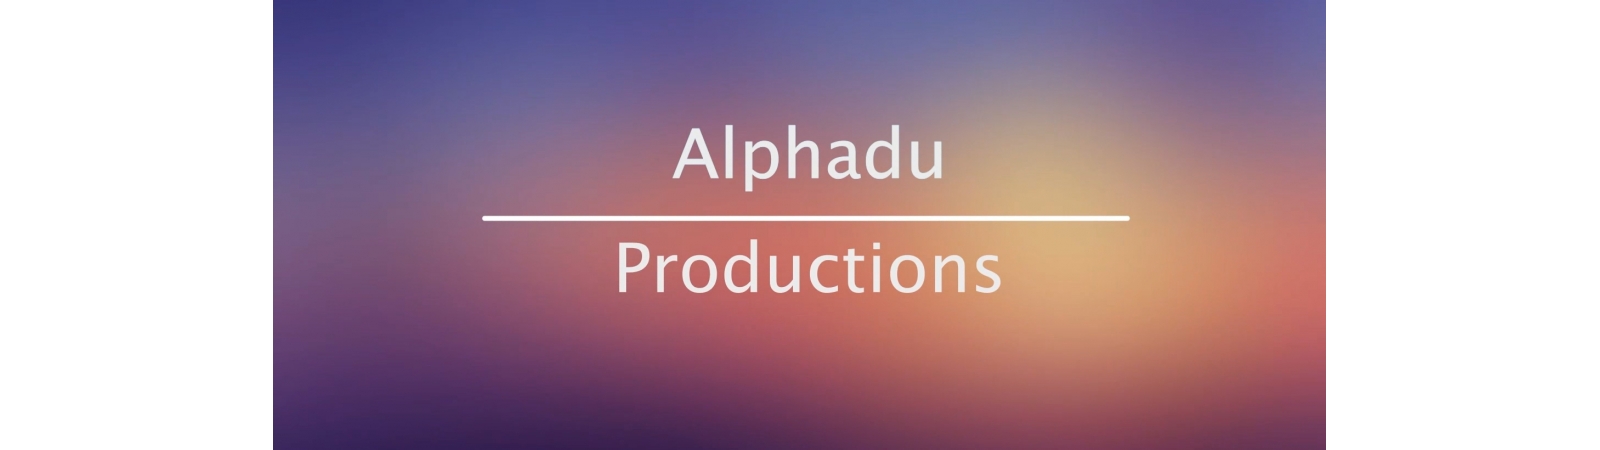 Alphadu Productions | AuctionNinja